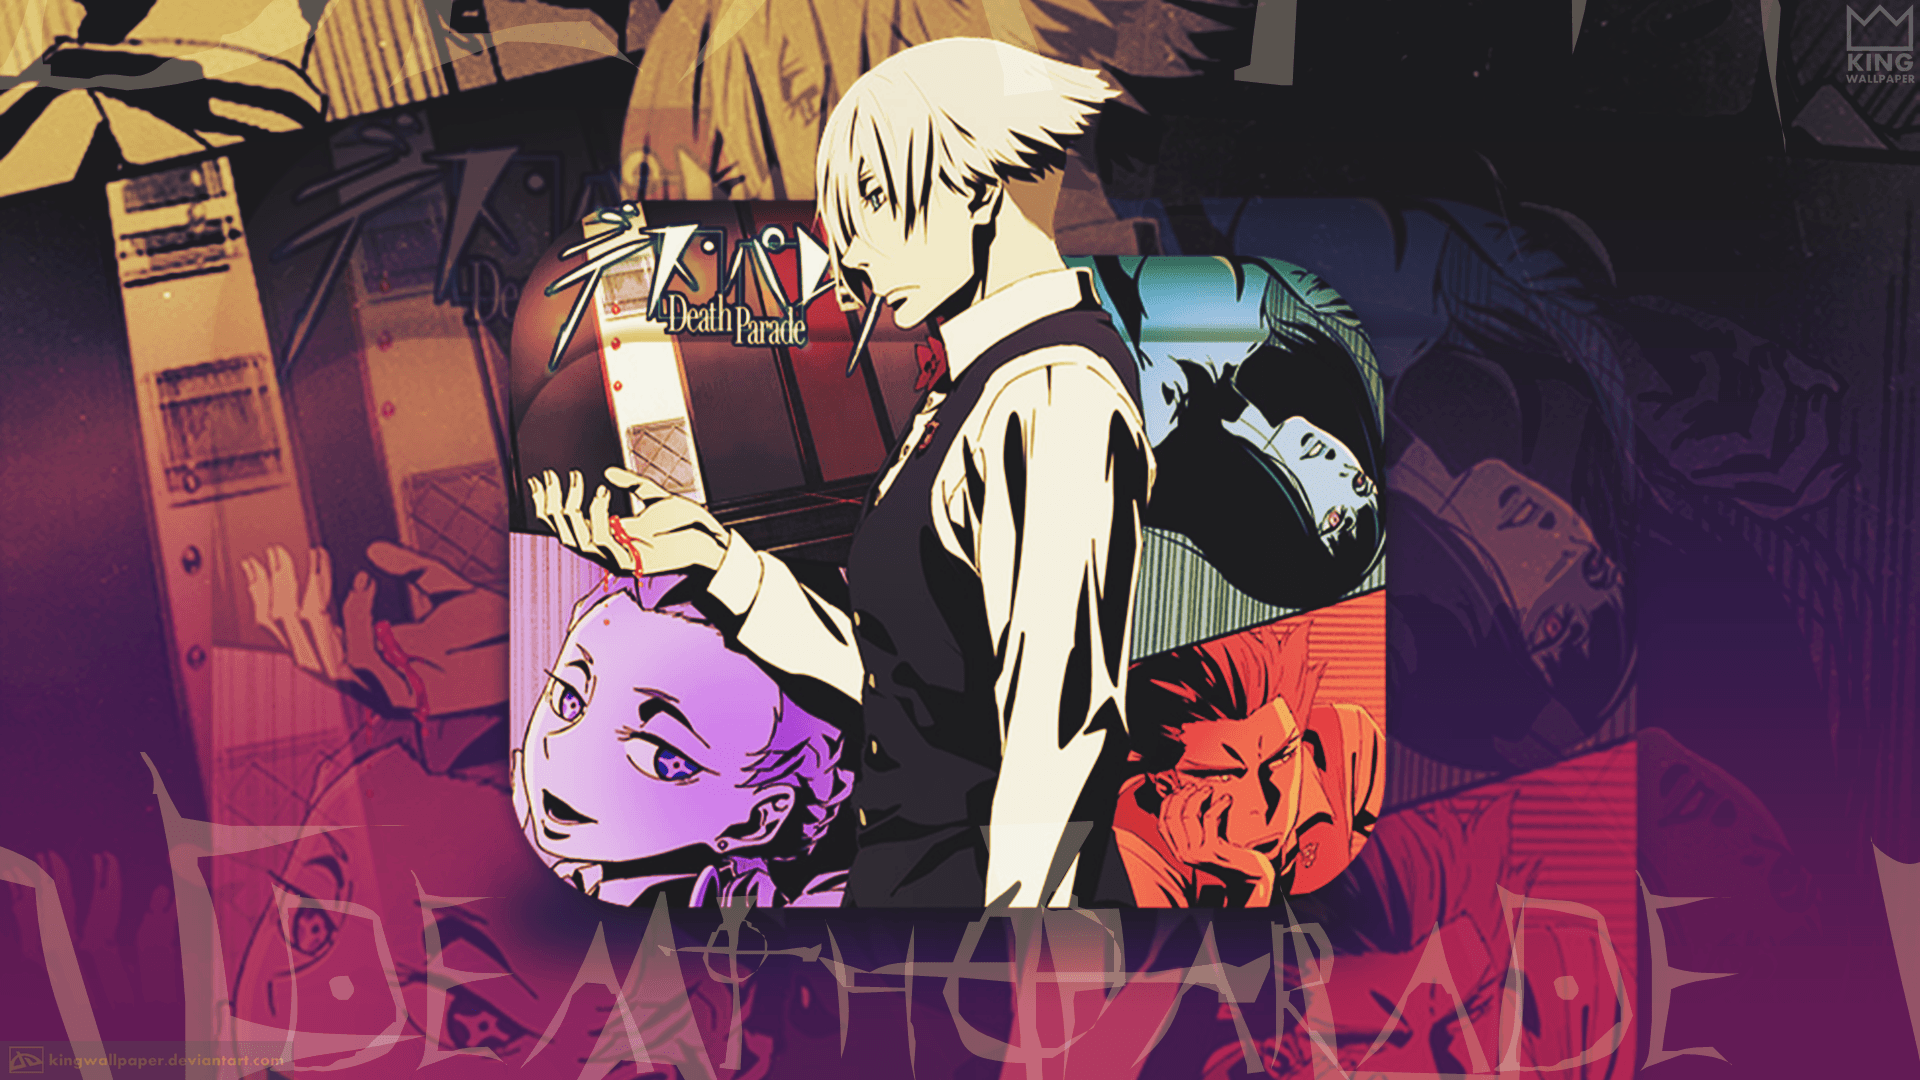 Anime Wallpapers 私 on Twitter Mobile Phone Wallpaper Anime Death Parade  httptco5L3mrwVoGp  Twitter